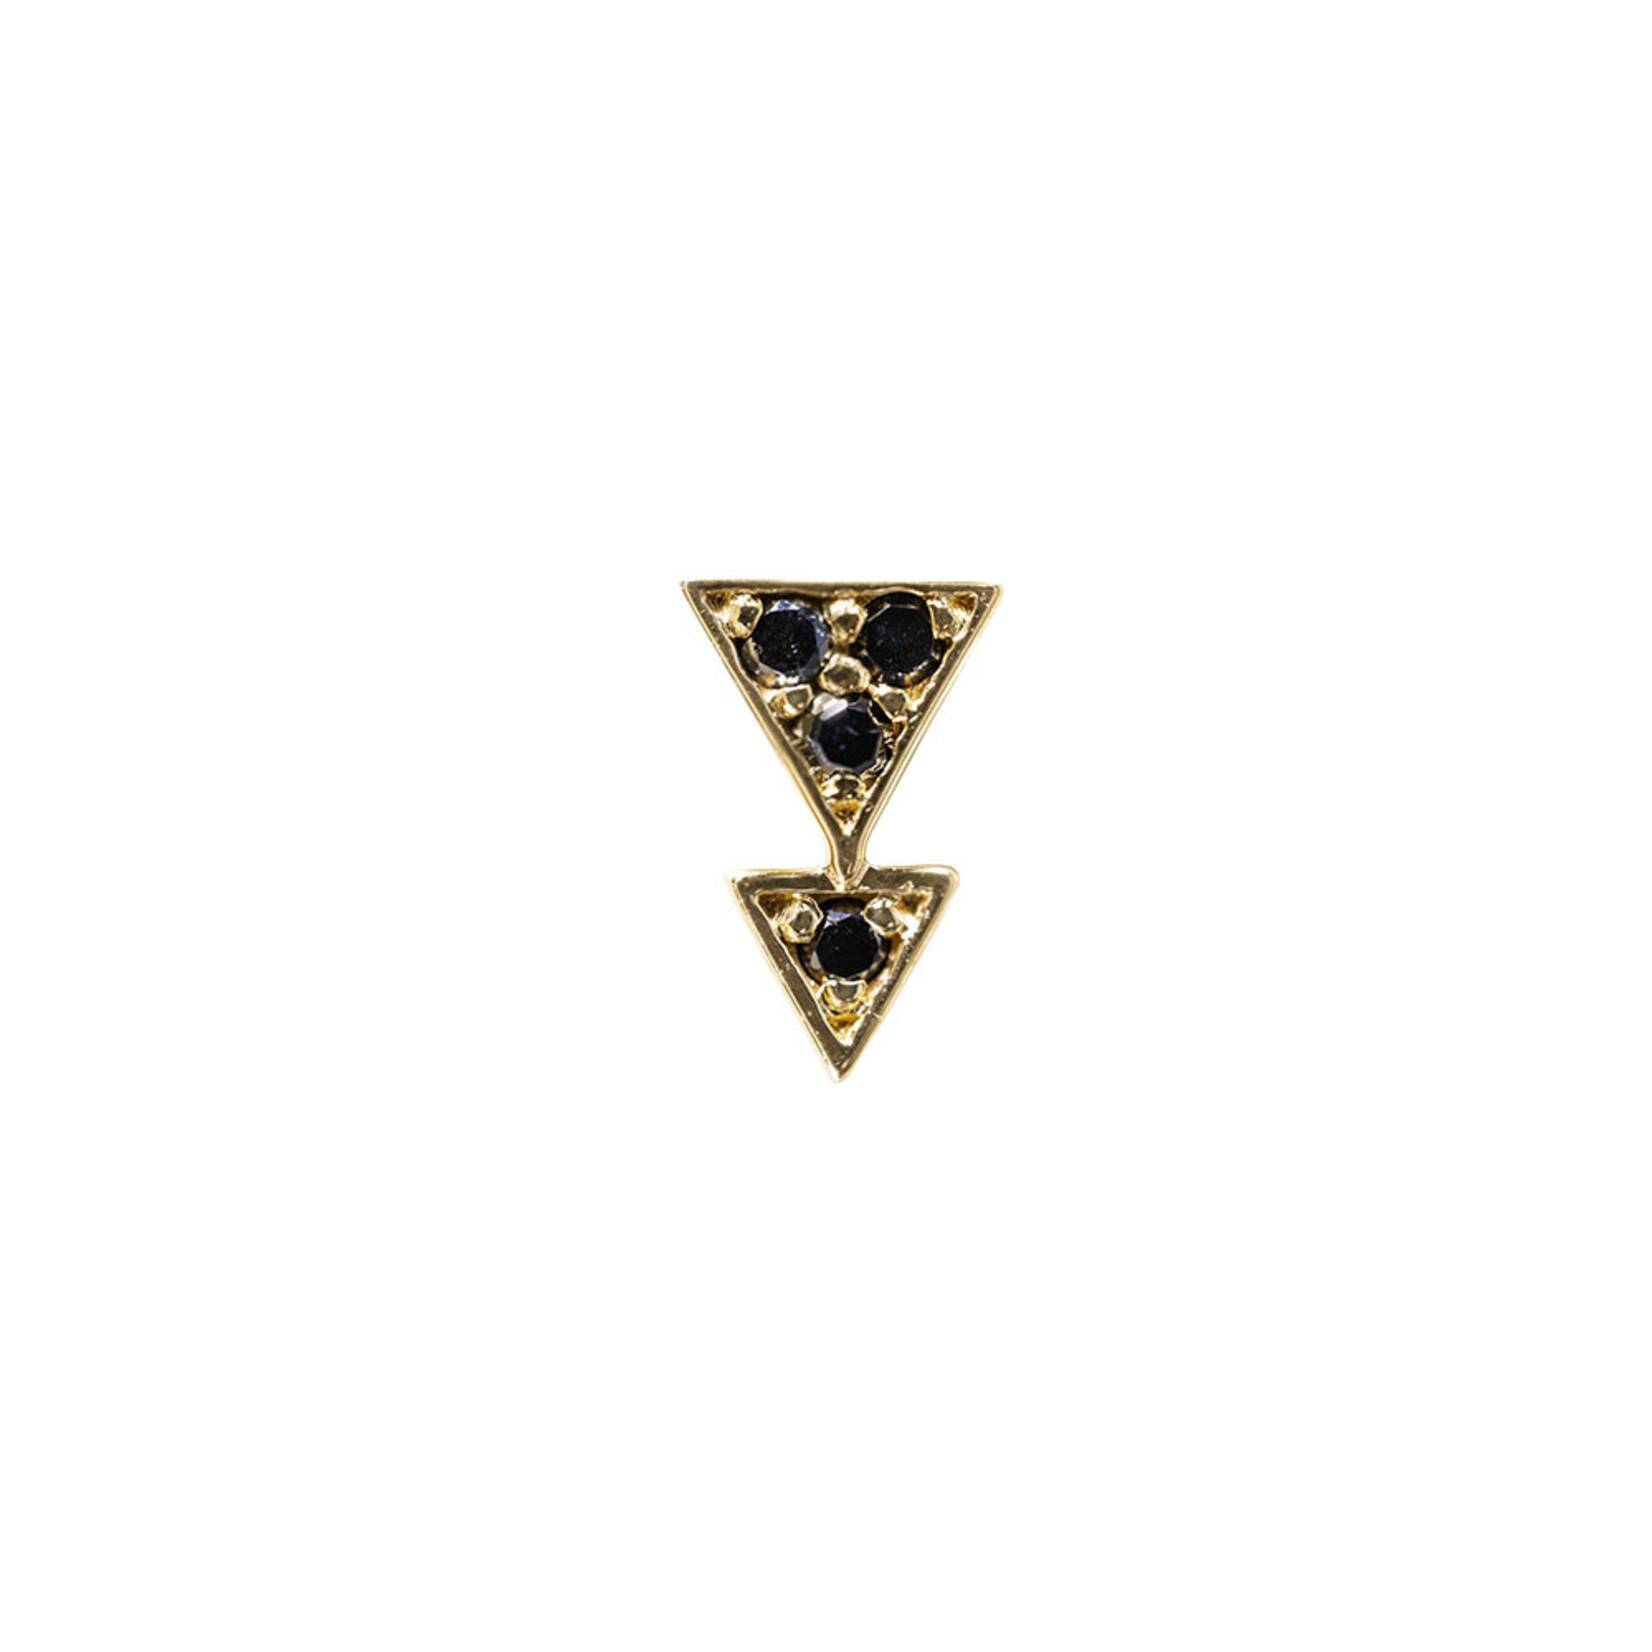 BVLA BVLA "Fate" threaded end with 4x 1.0 black diamond